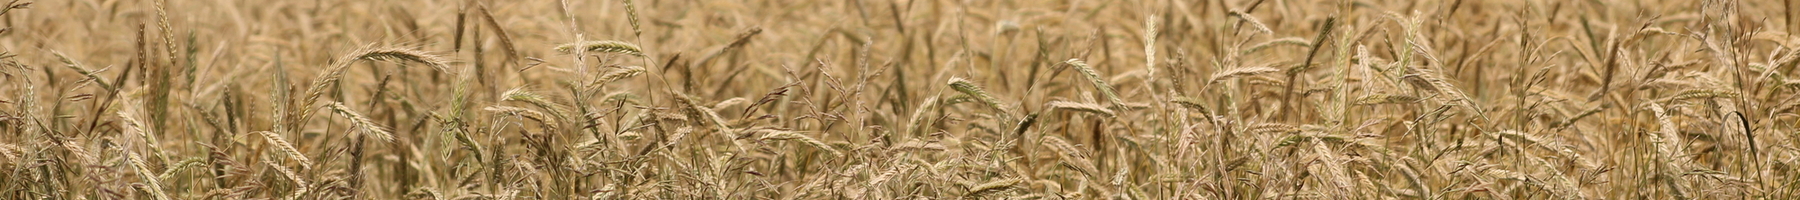 Field of light brown wheat